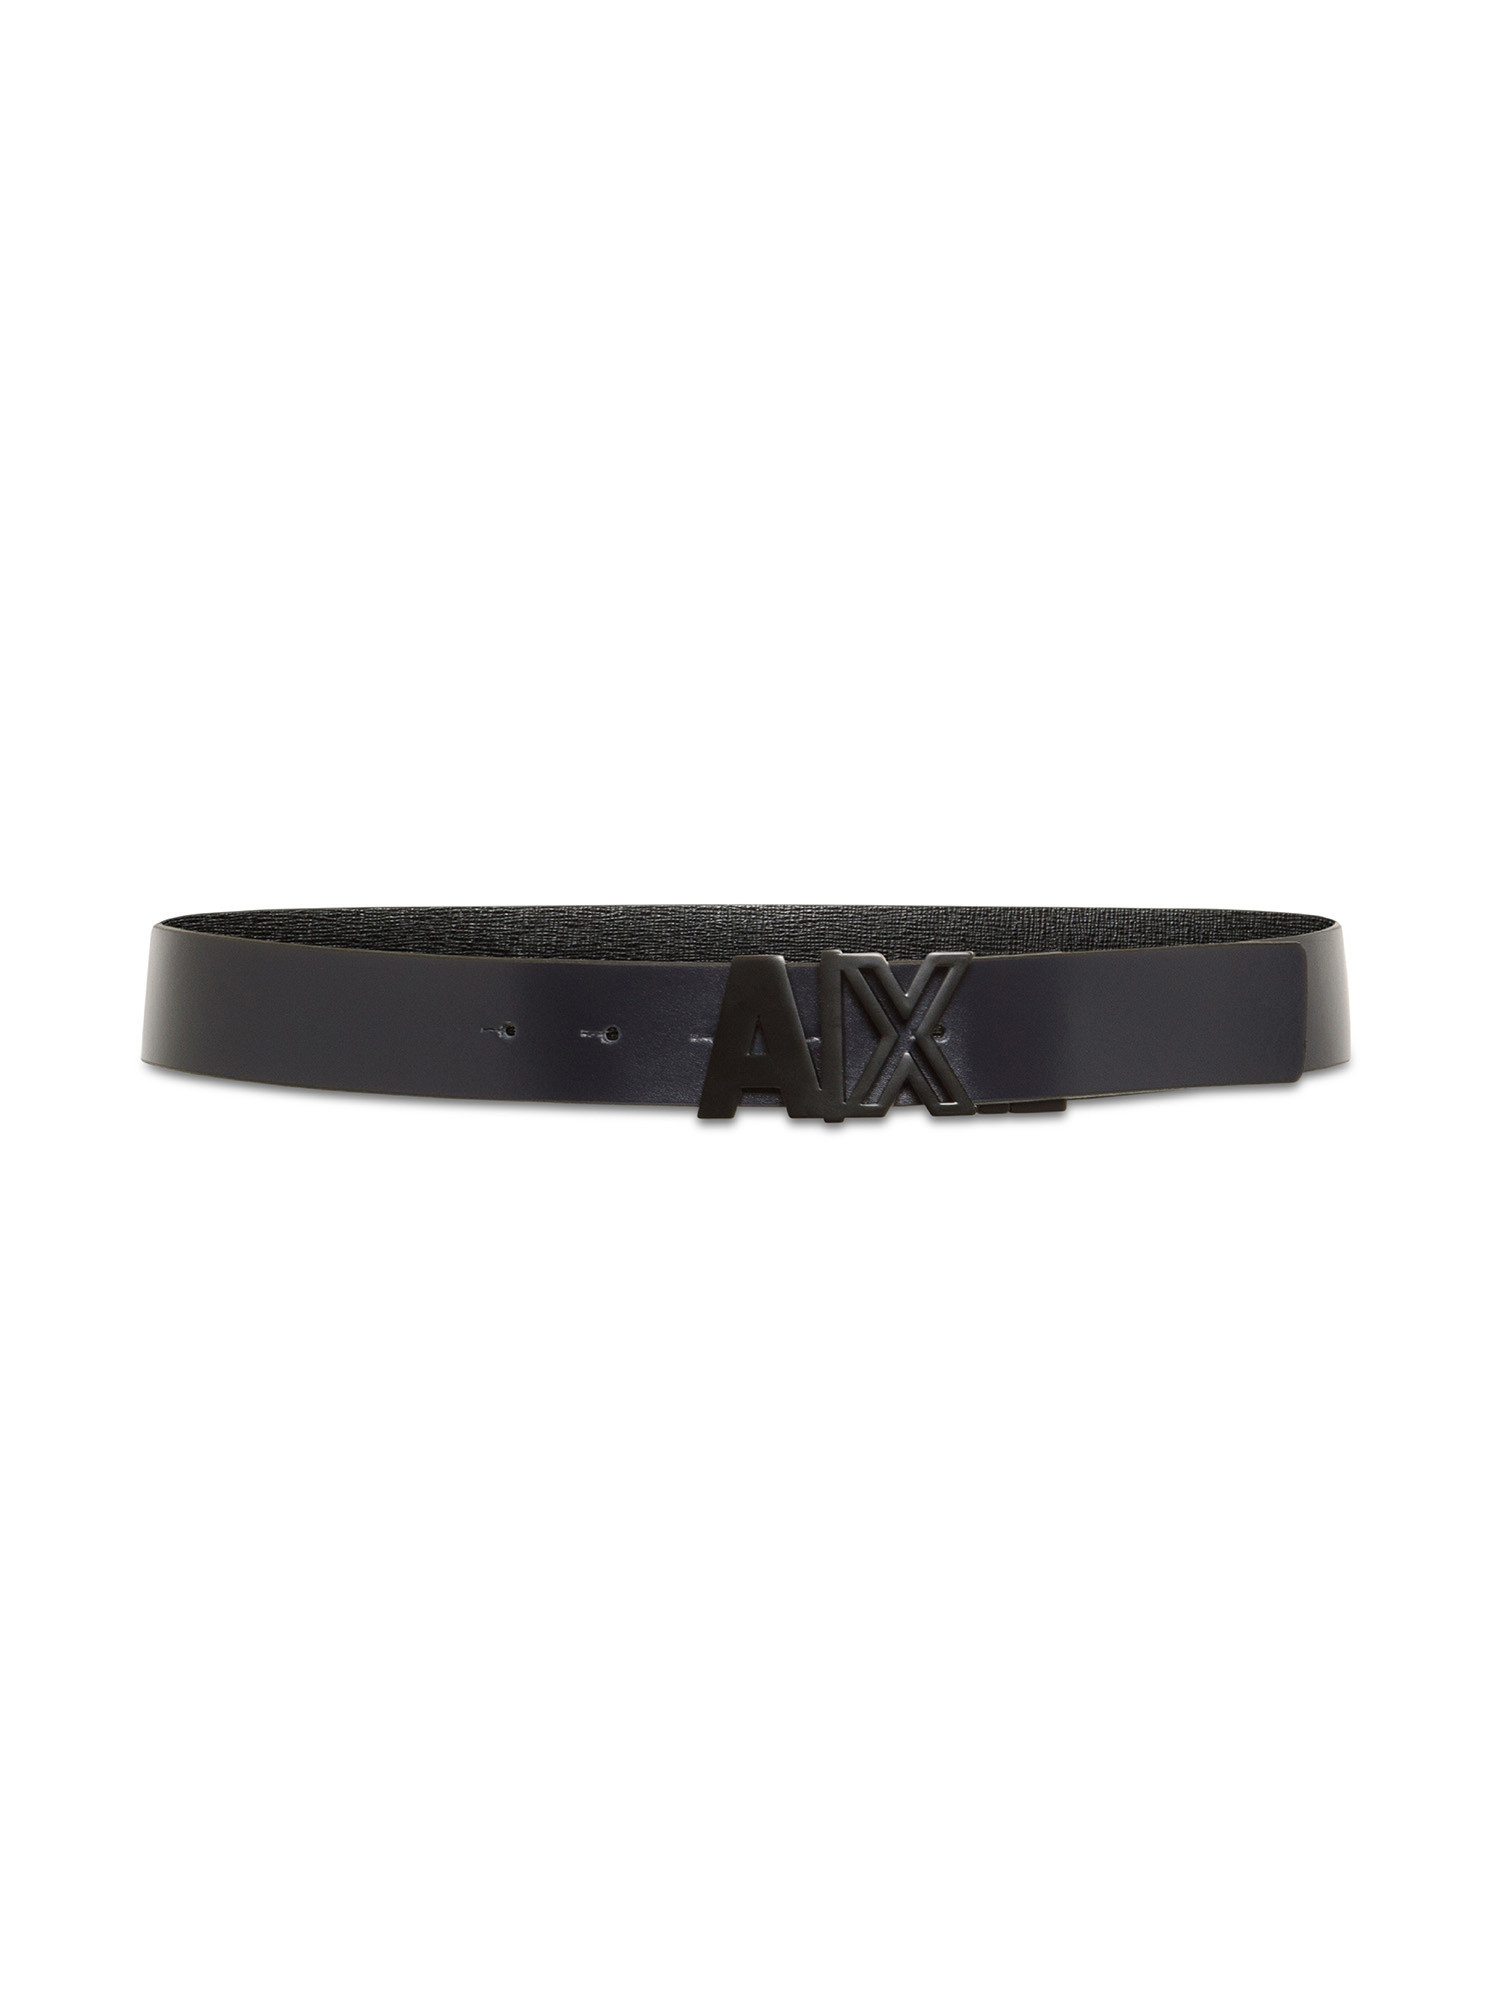 Armani Exchange - Cintura reversibile in pelle, Blu scuro, large image number 1